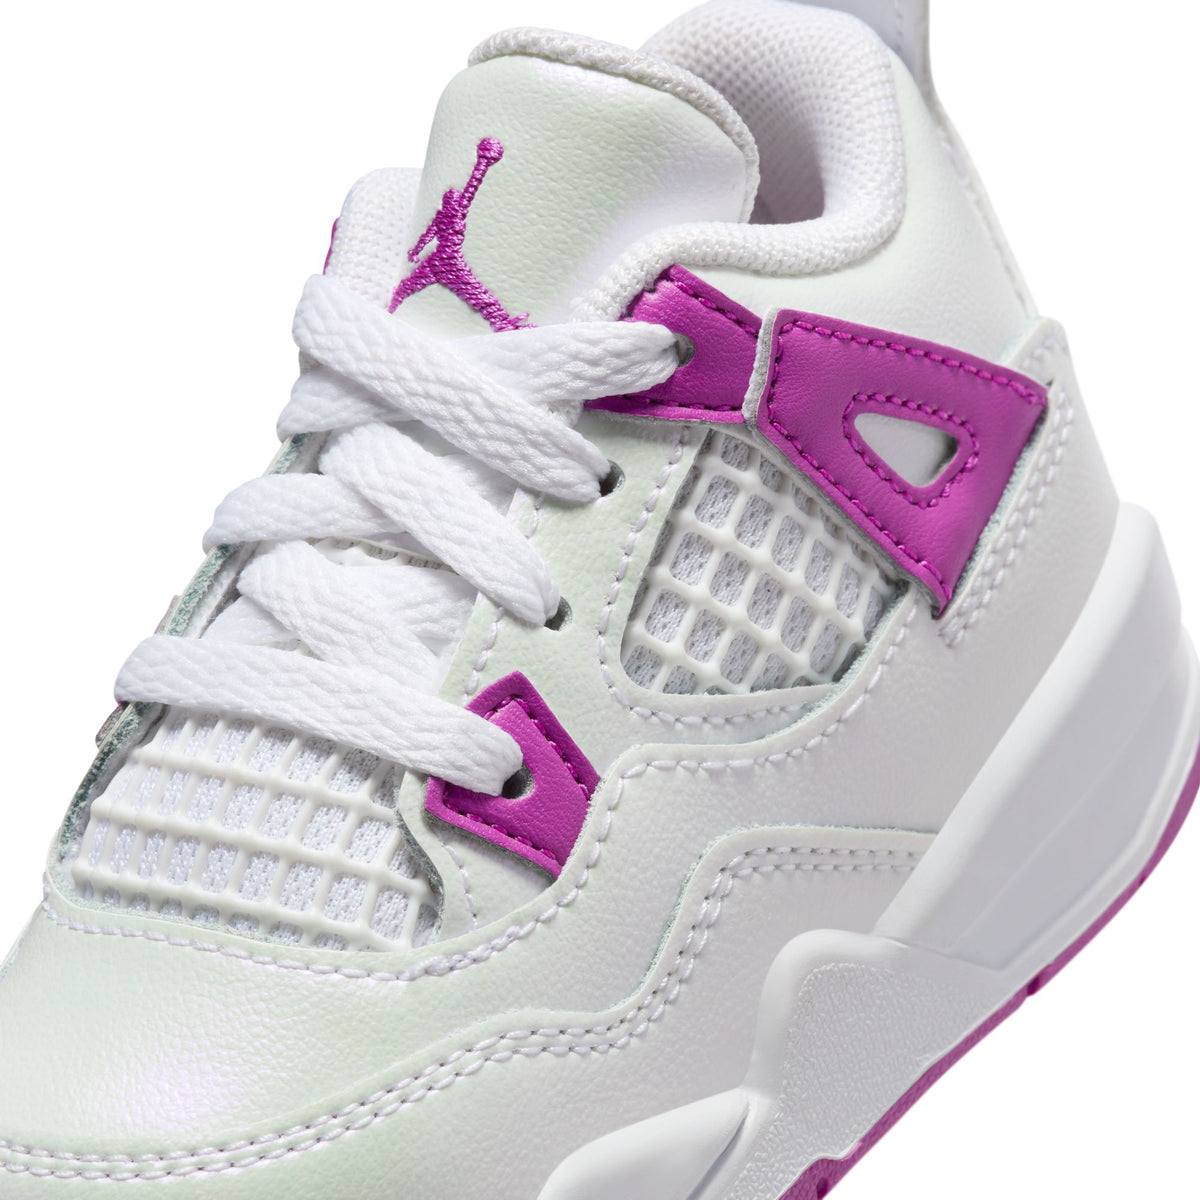 Air Jordan 4 Retro "Hyper Violet" Toddler - Kids